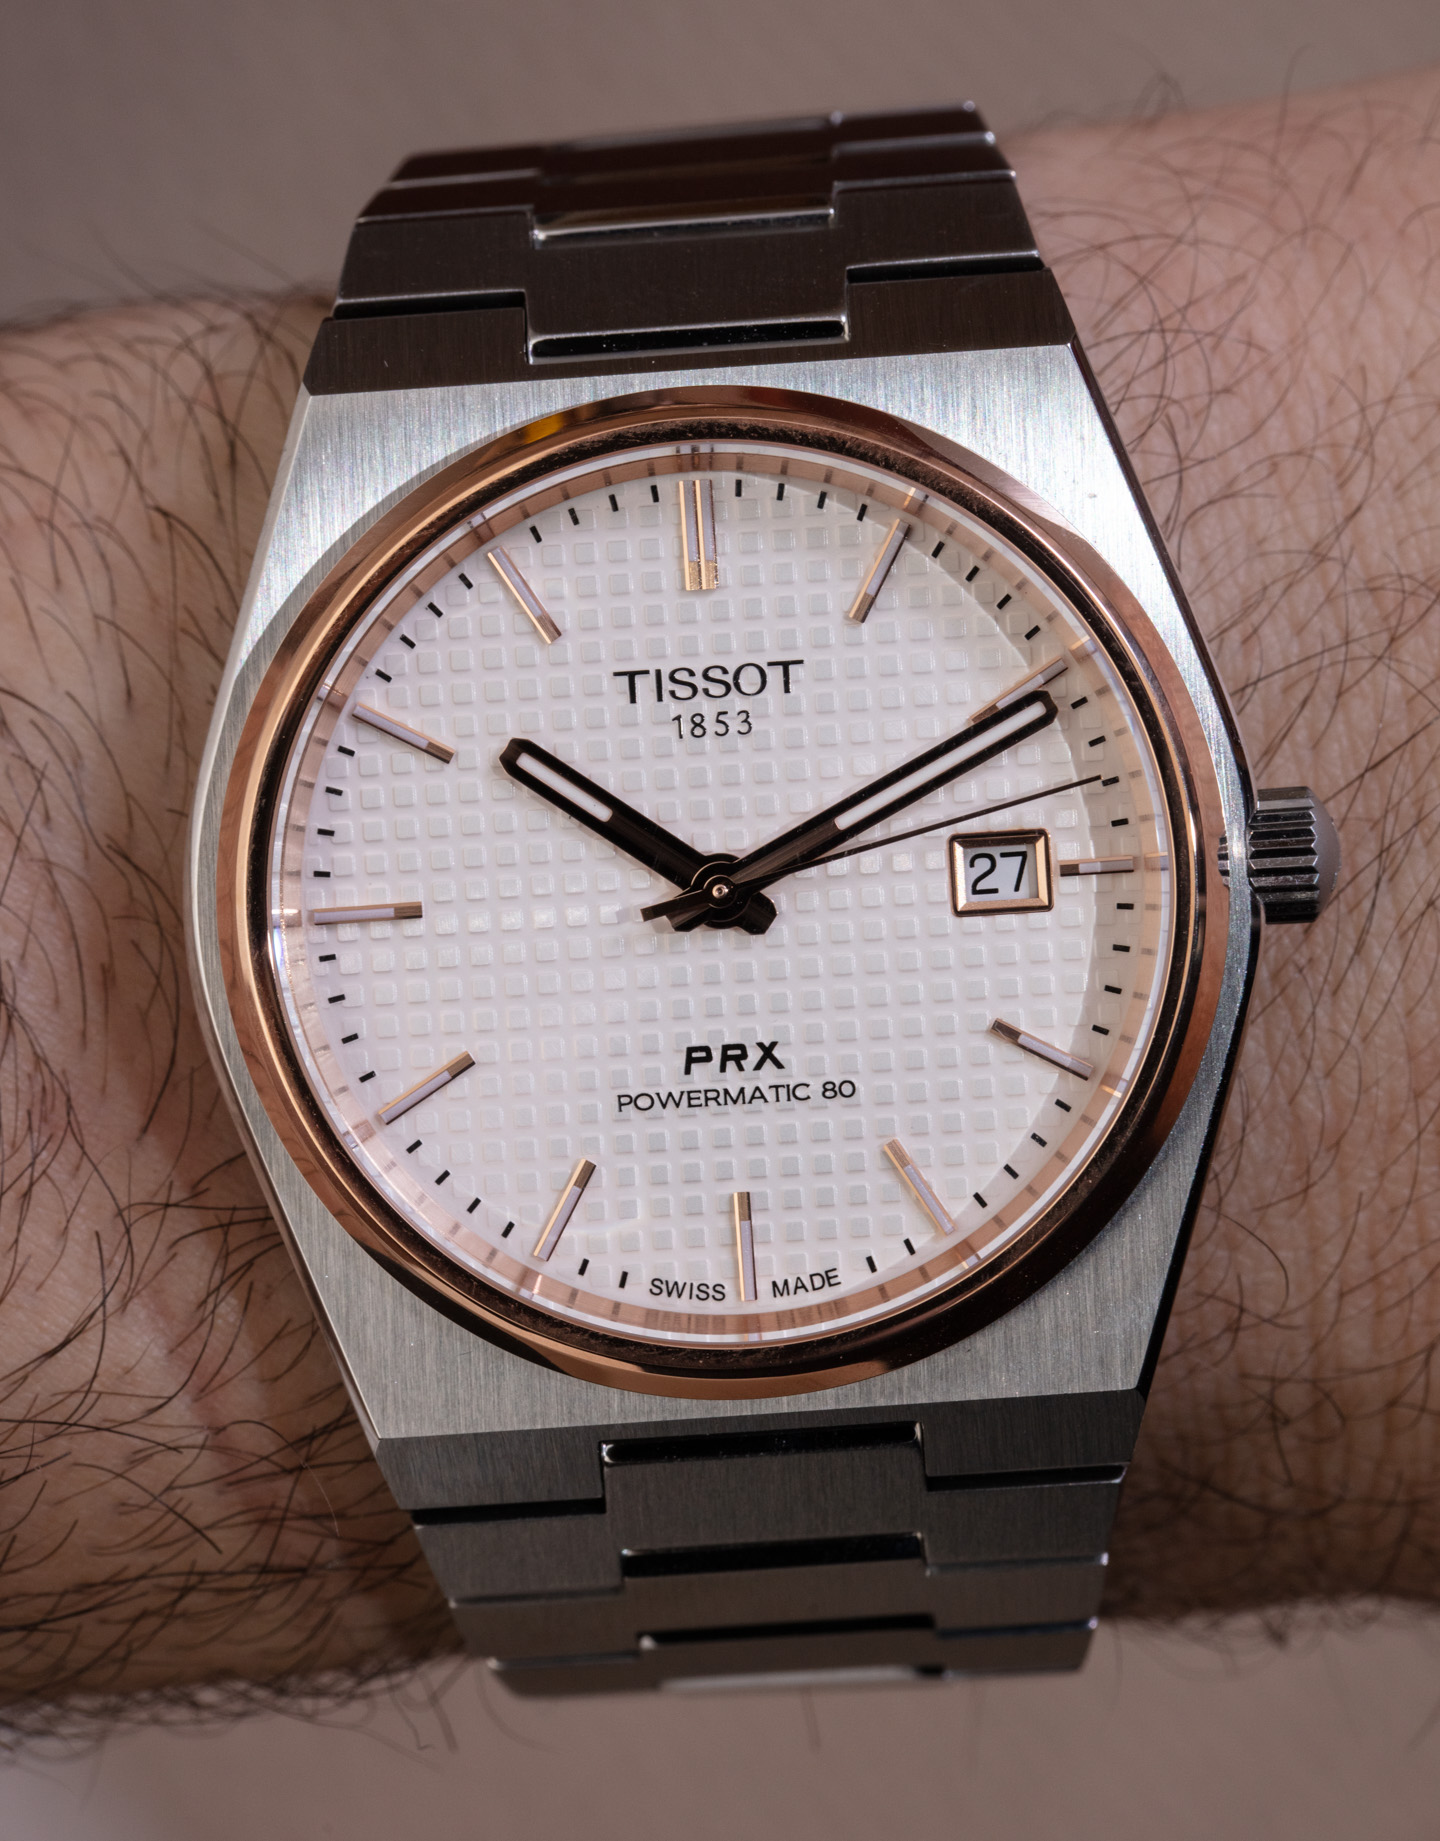 Watch Review: Tissot PRX Automatic | aBlogtoWatch